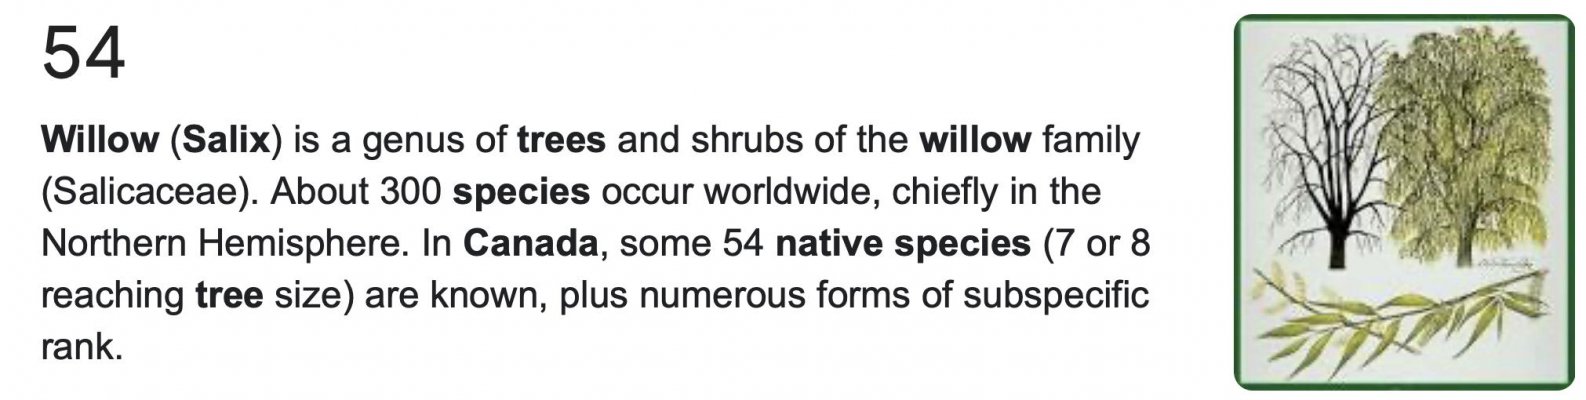 Willow species in Canada.jpg